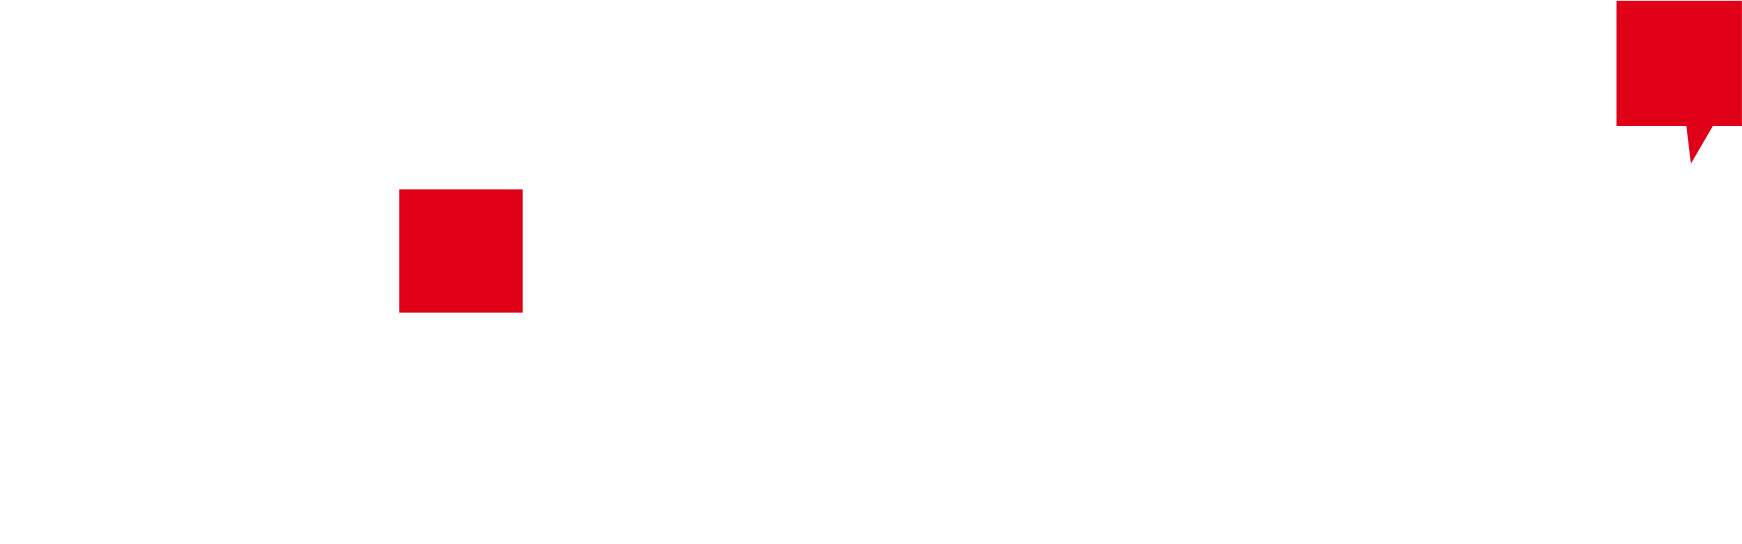 Logo de enercoop